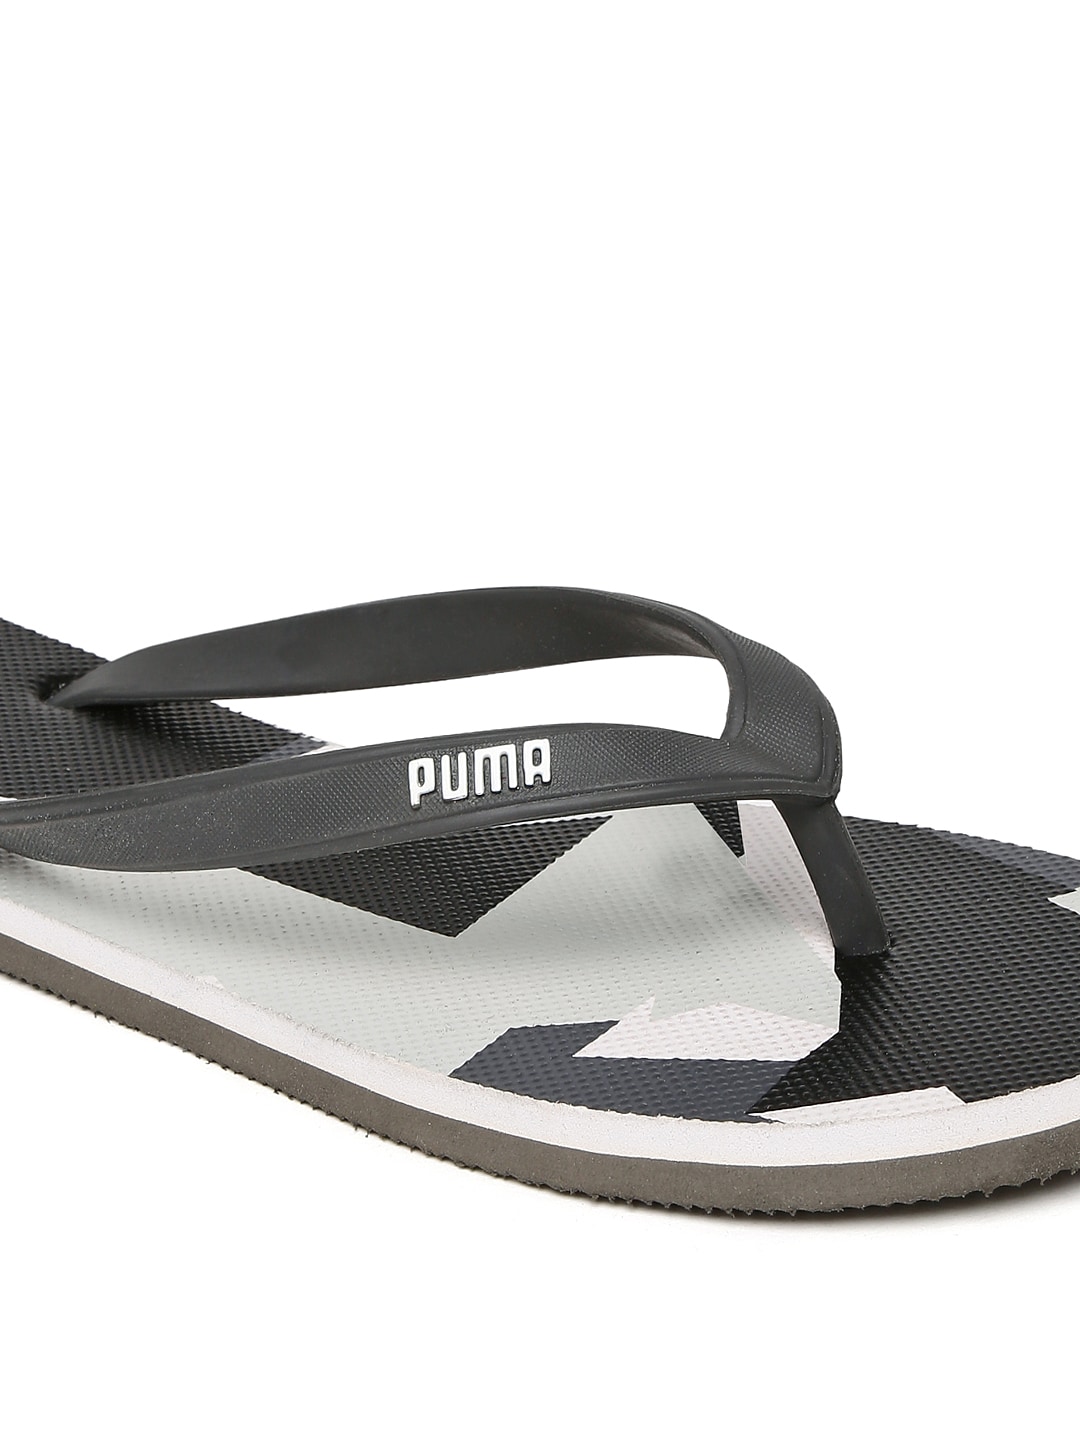 puma flip flop with discount